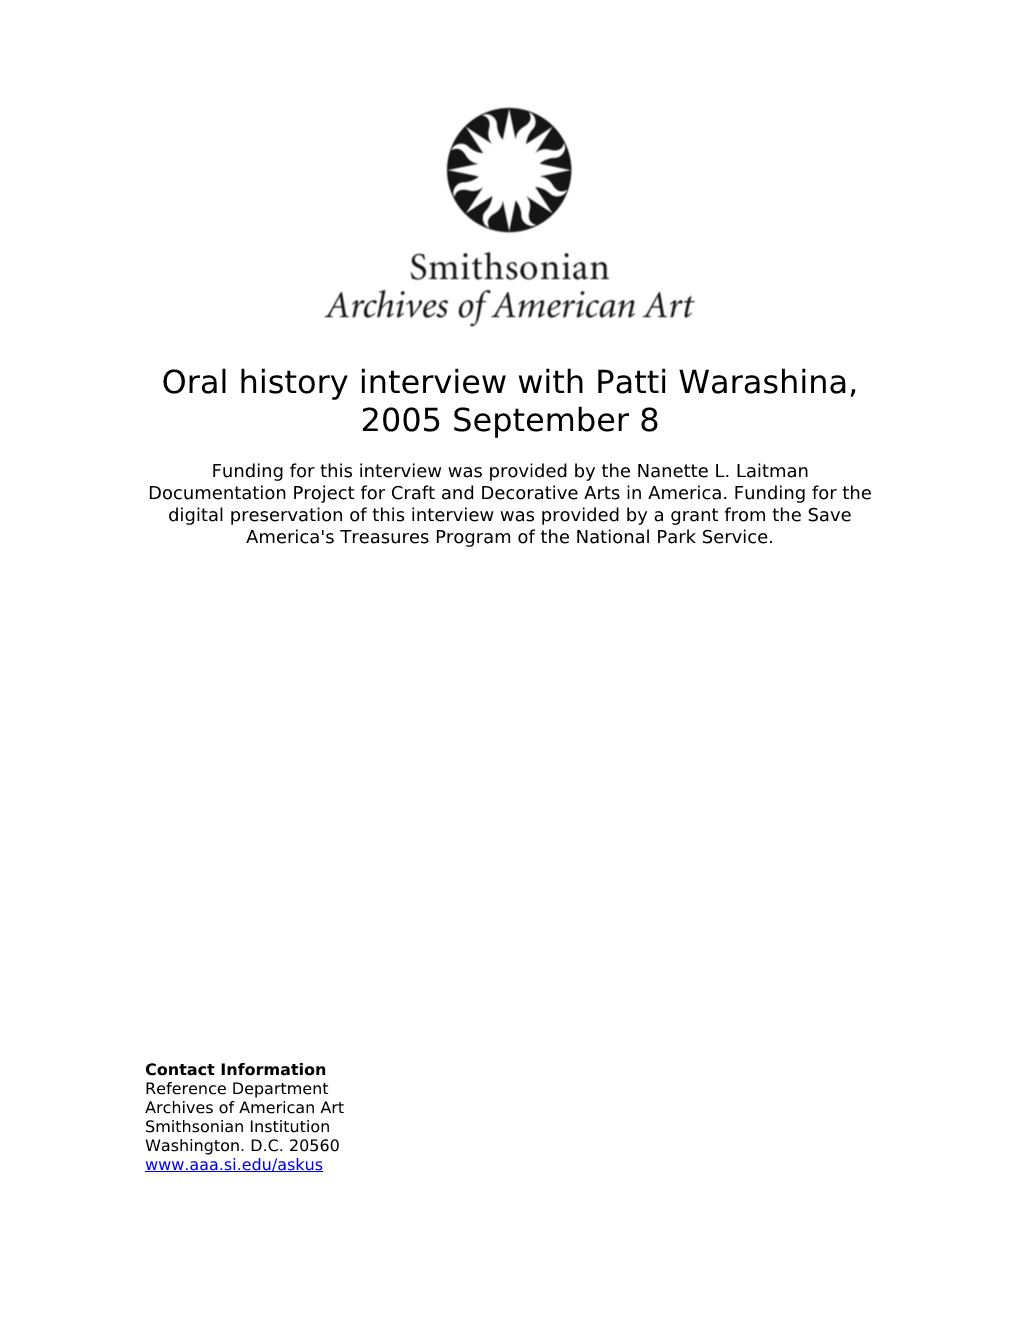 Oral History Interview with Patti Warashina, 2005 September 8